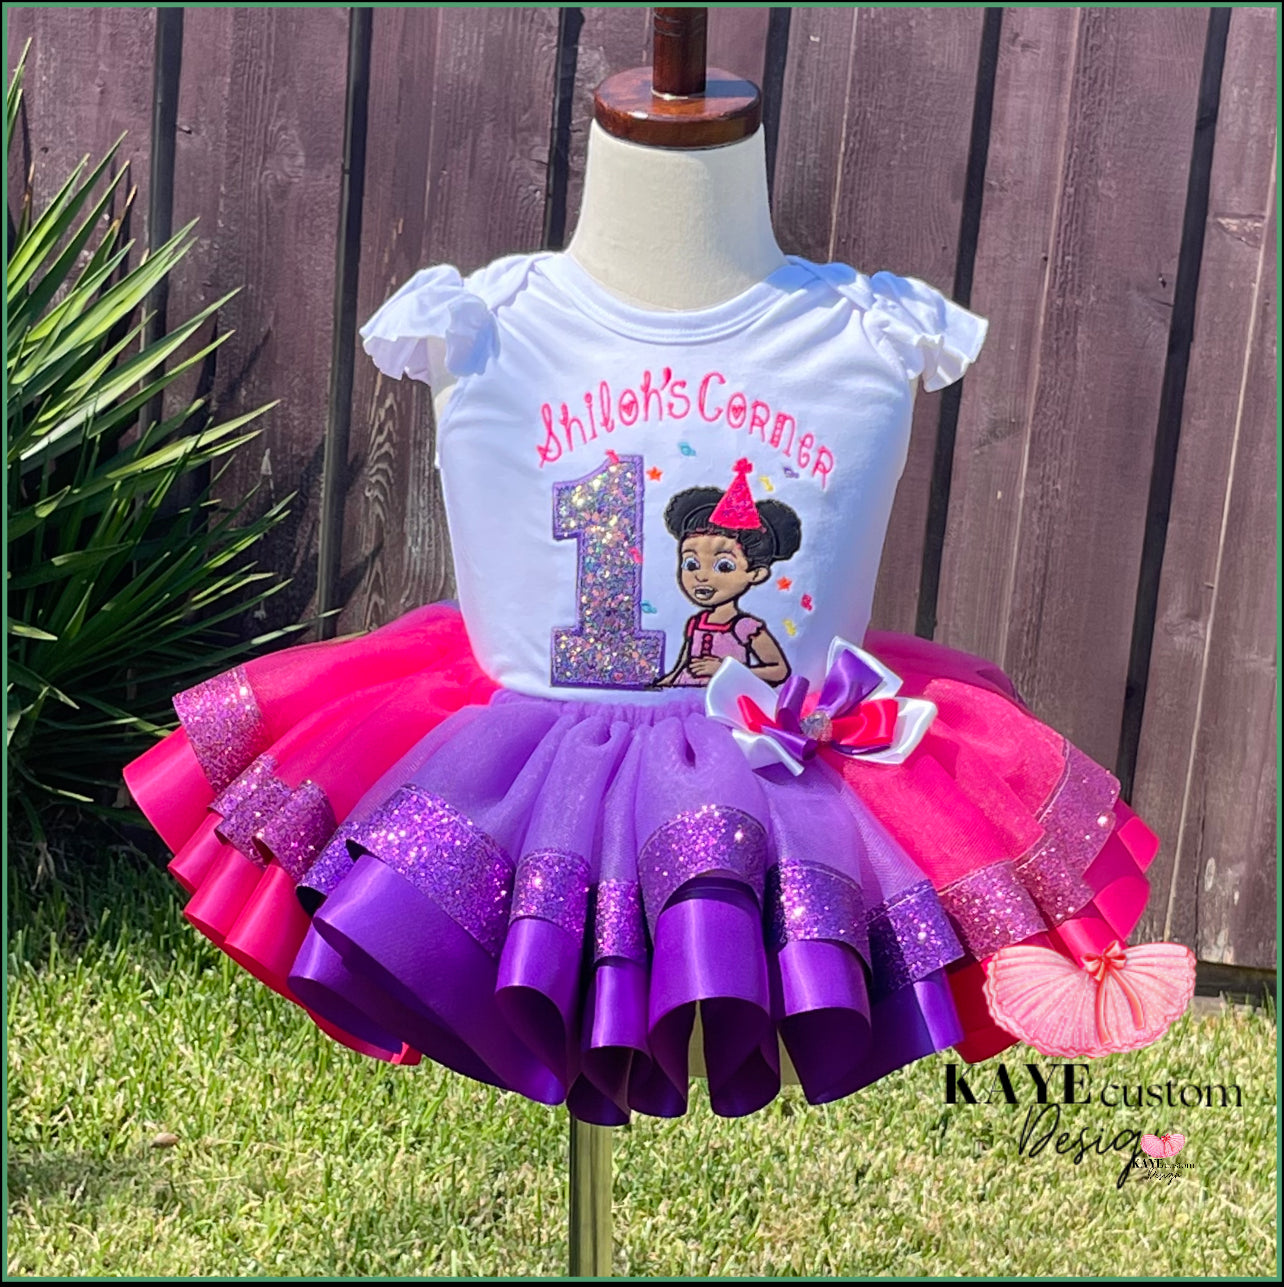 Gracie’s Corner Custom Birthday Tutu Outfit | Pink and Purple Tutu Set for Girl Kaye Custom Design